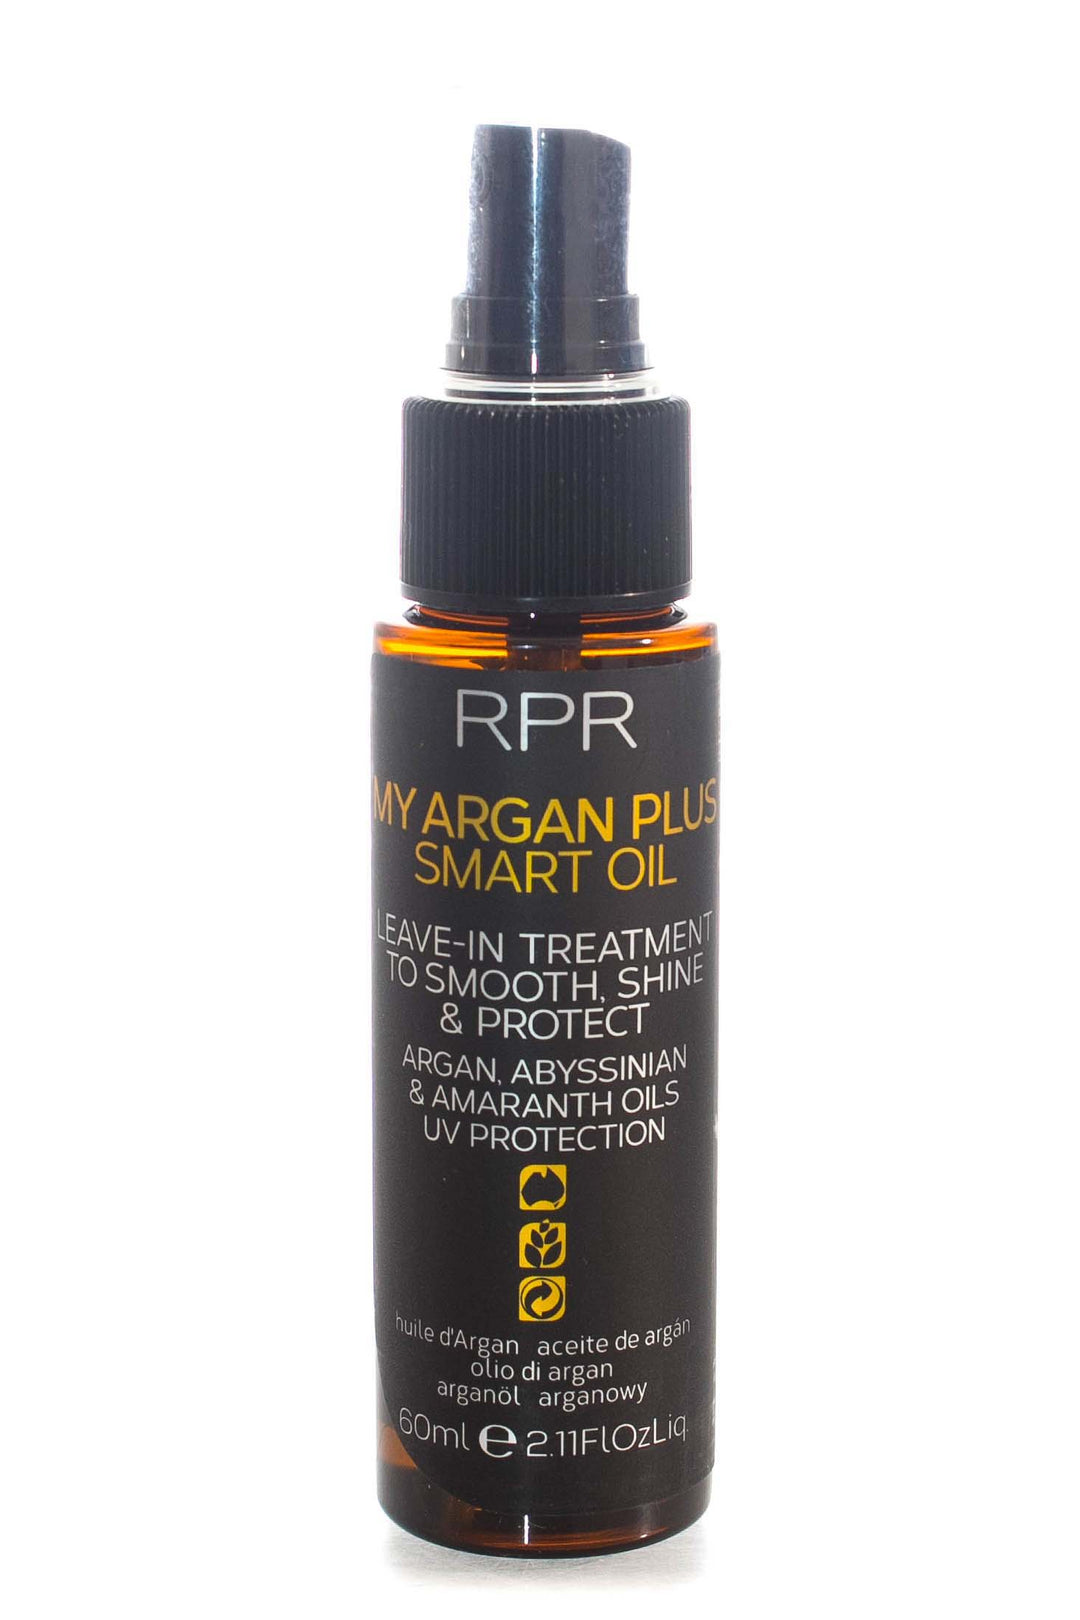 rpr-my-argan-plus-smart-oil-60ml